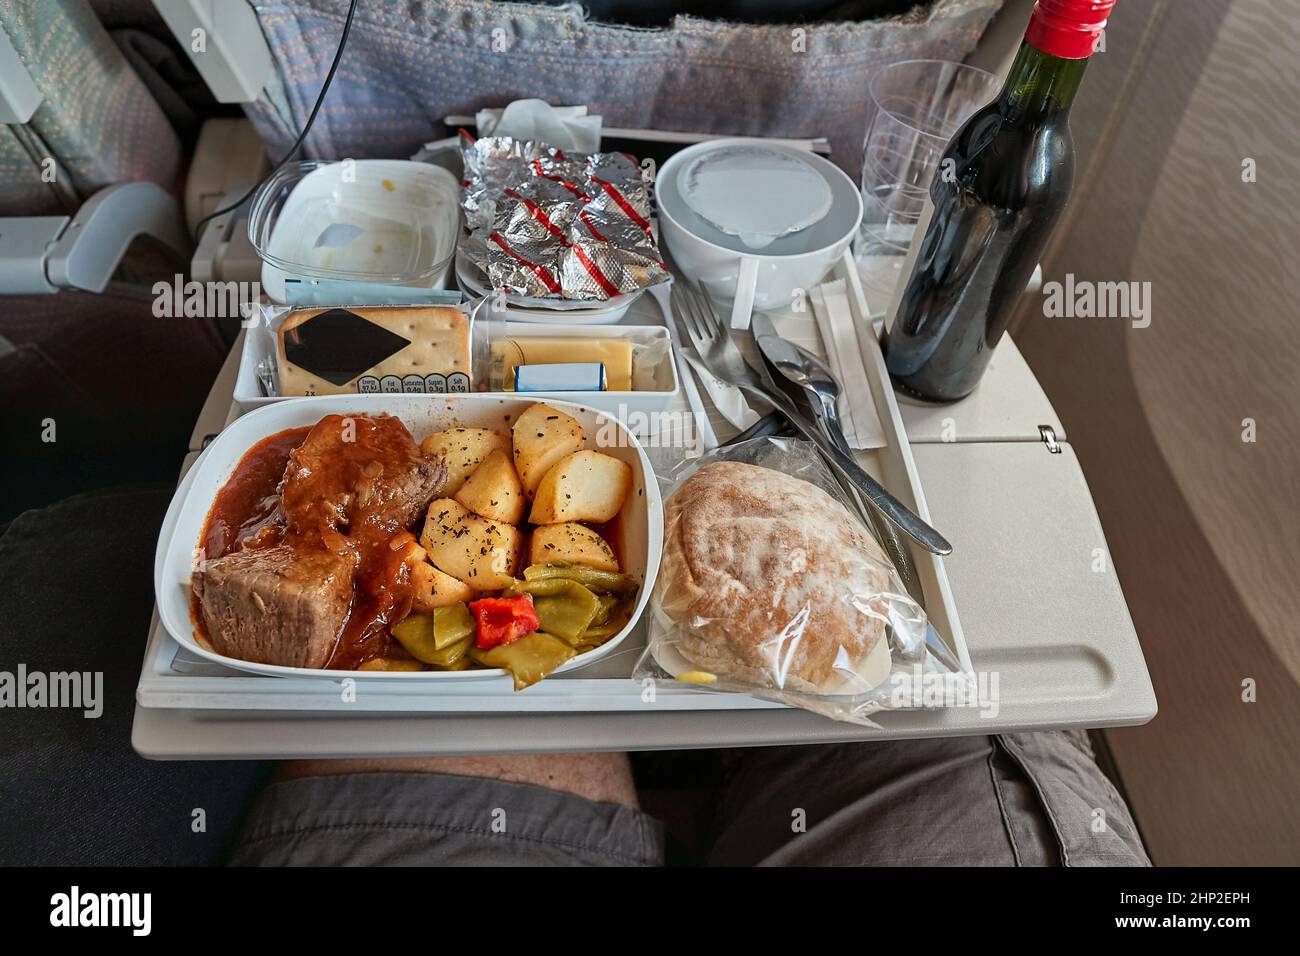 Airplane food provided on a long distance transatlantic flight Stock Photo